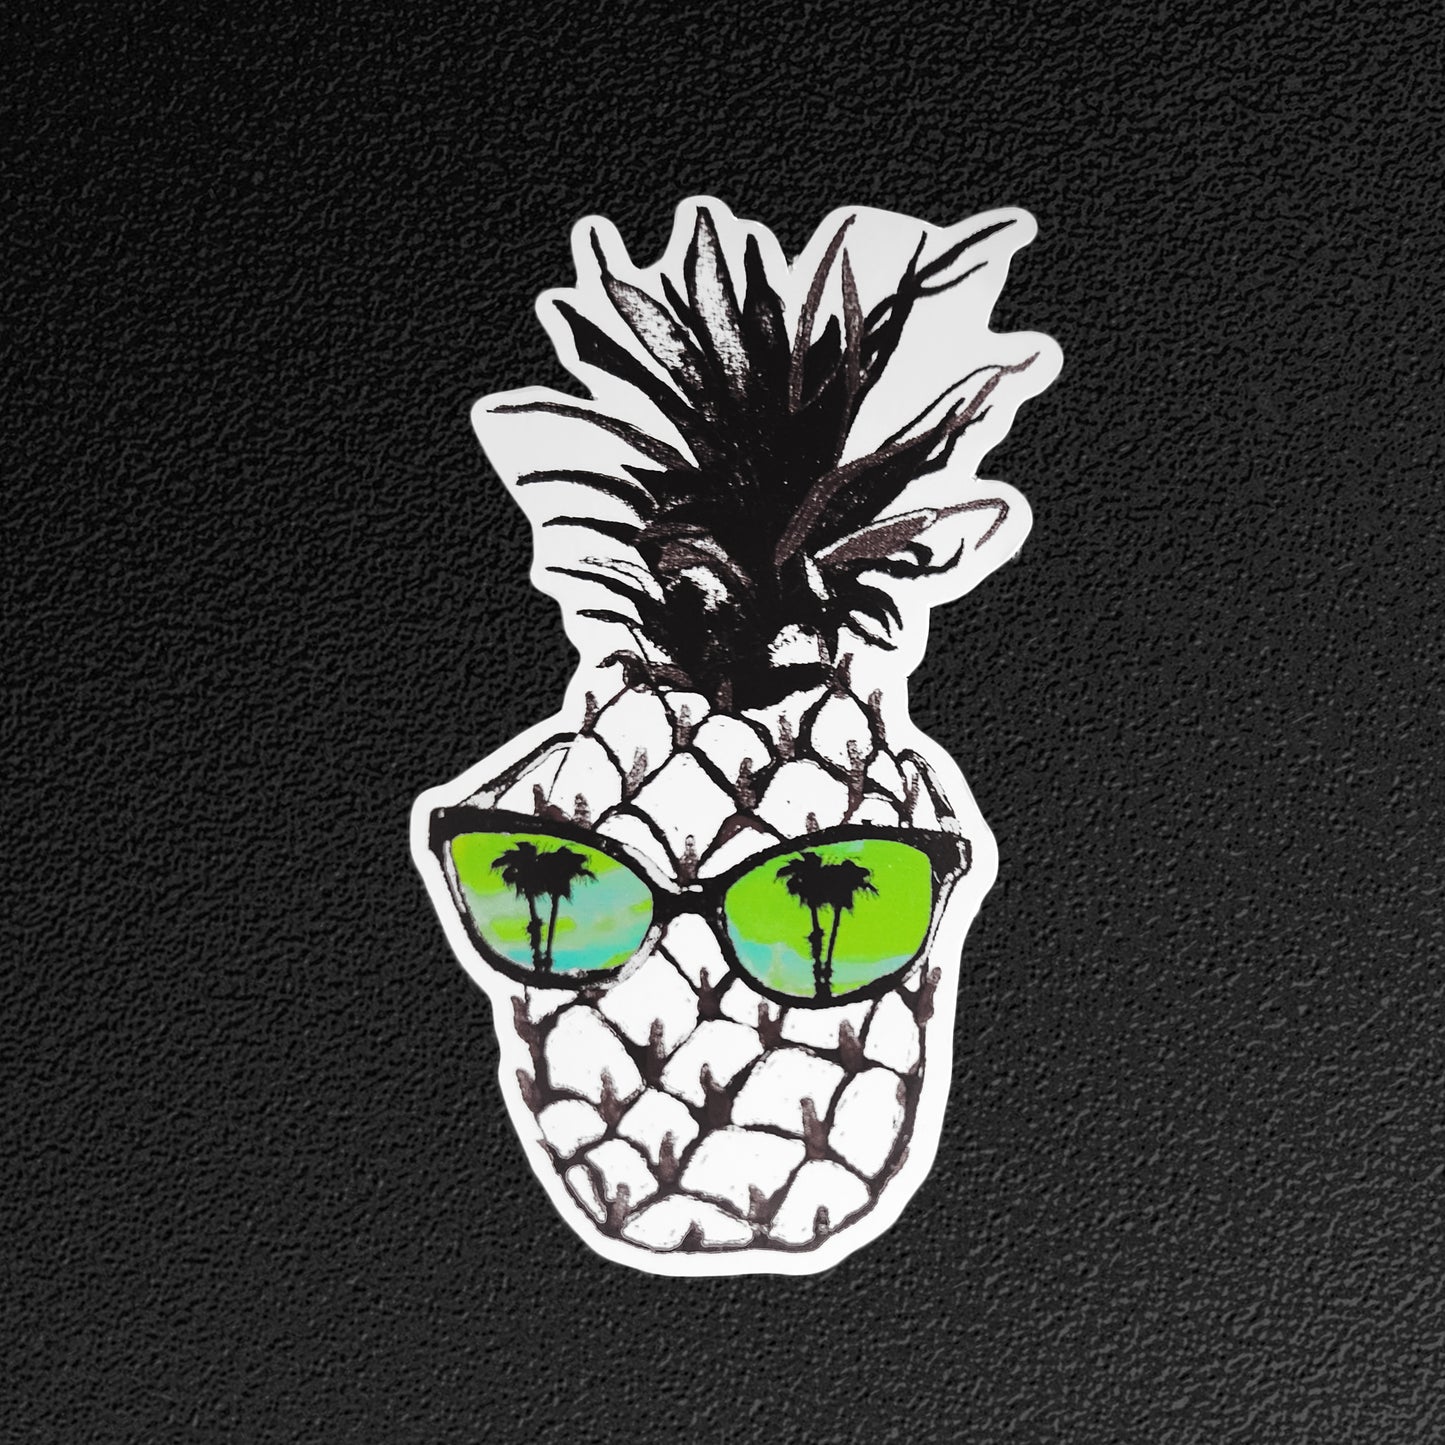 Hot Pineapple in Green Vinyl Sticker/Decal